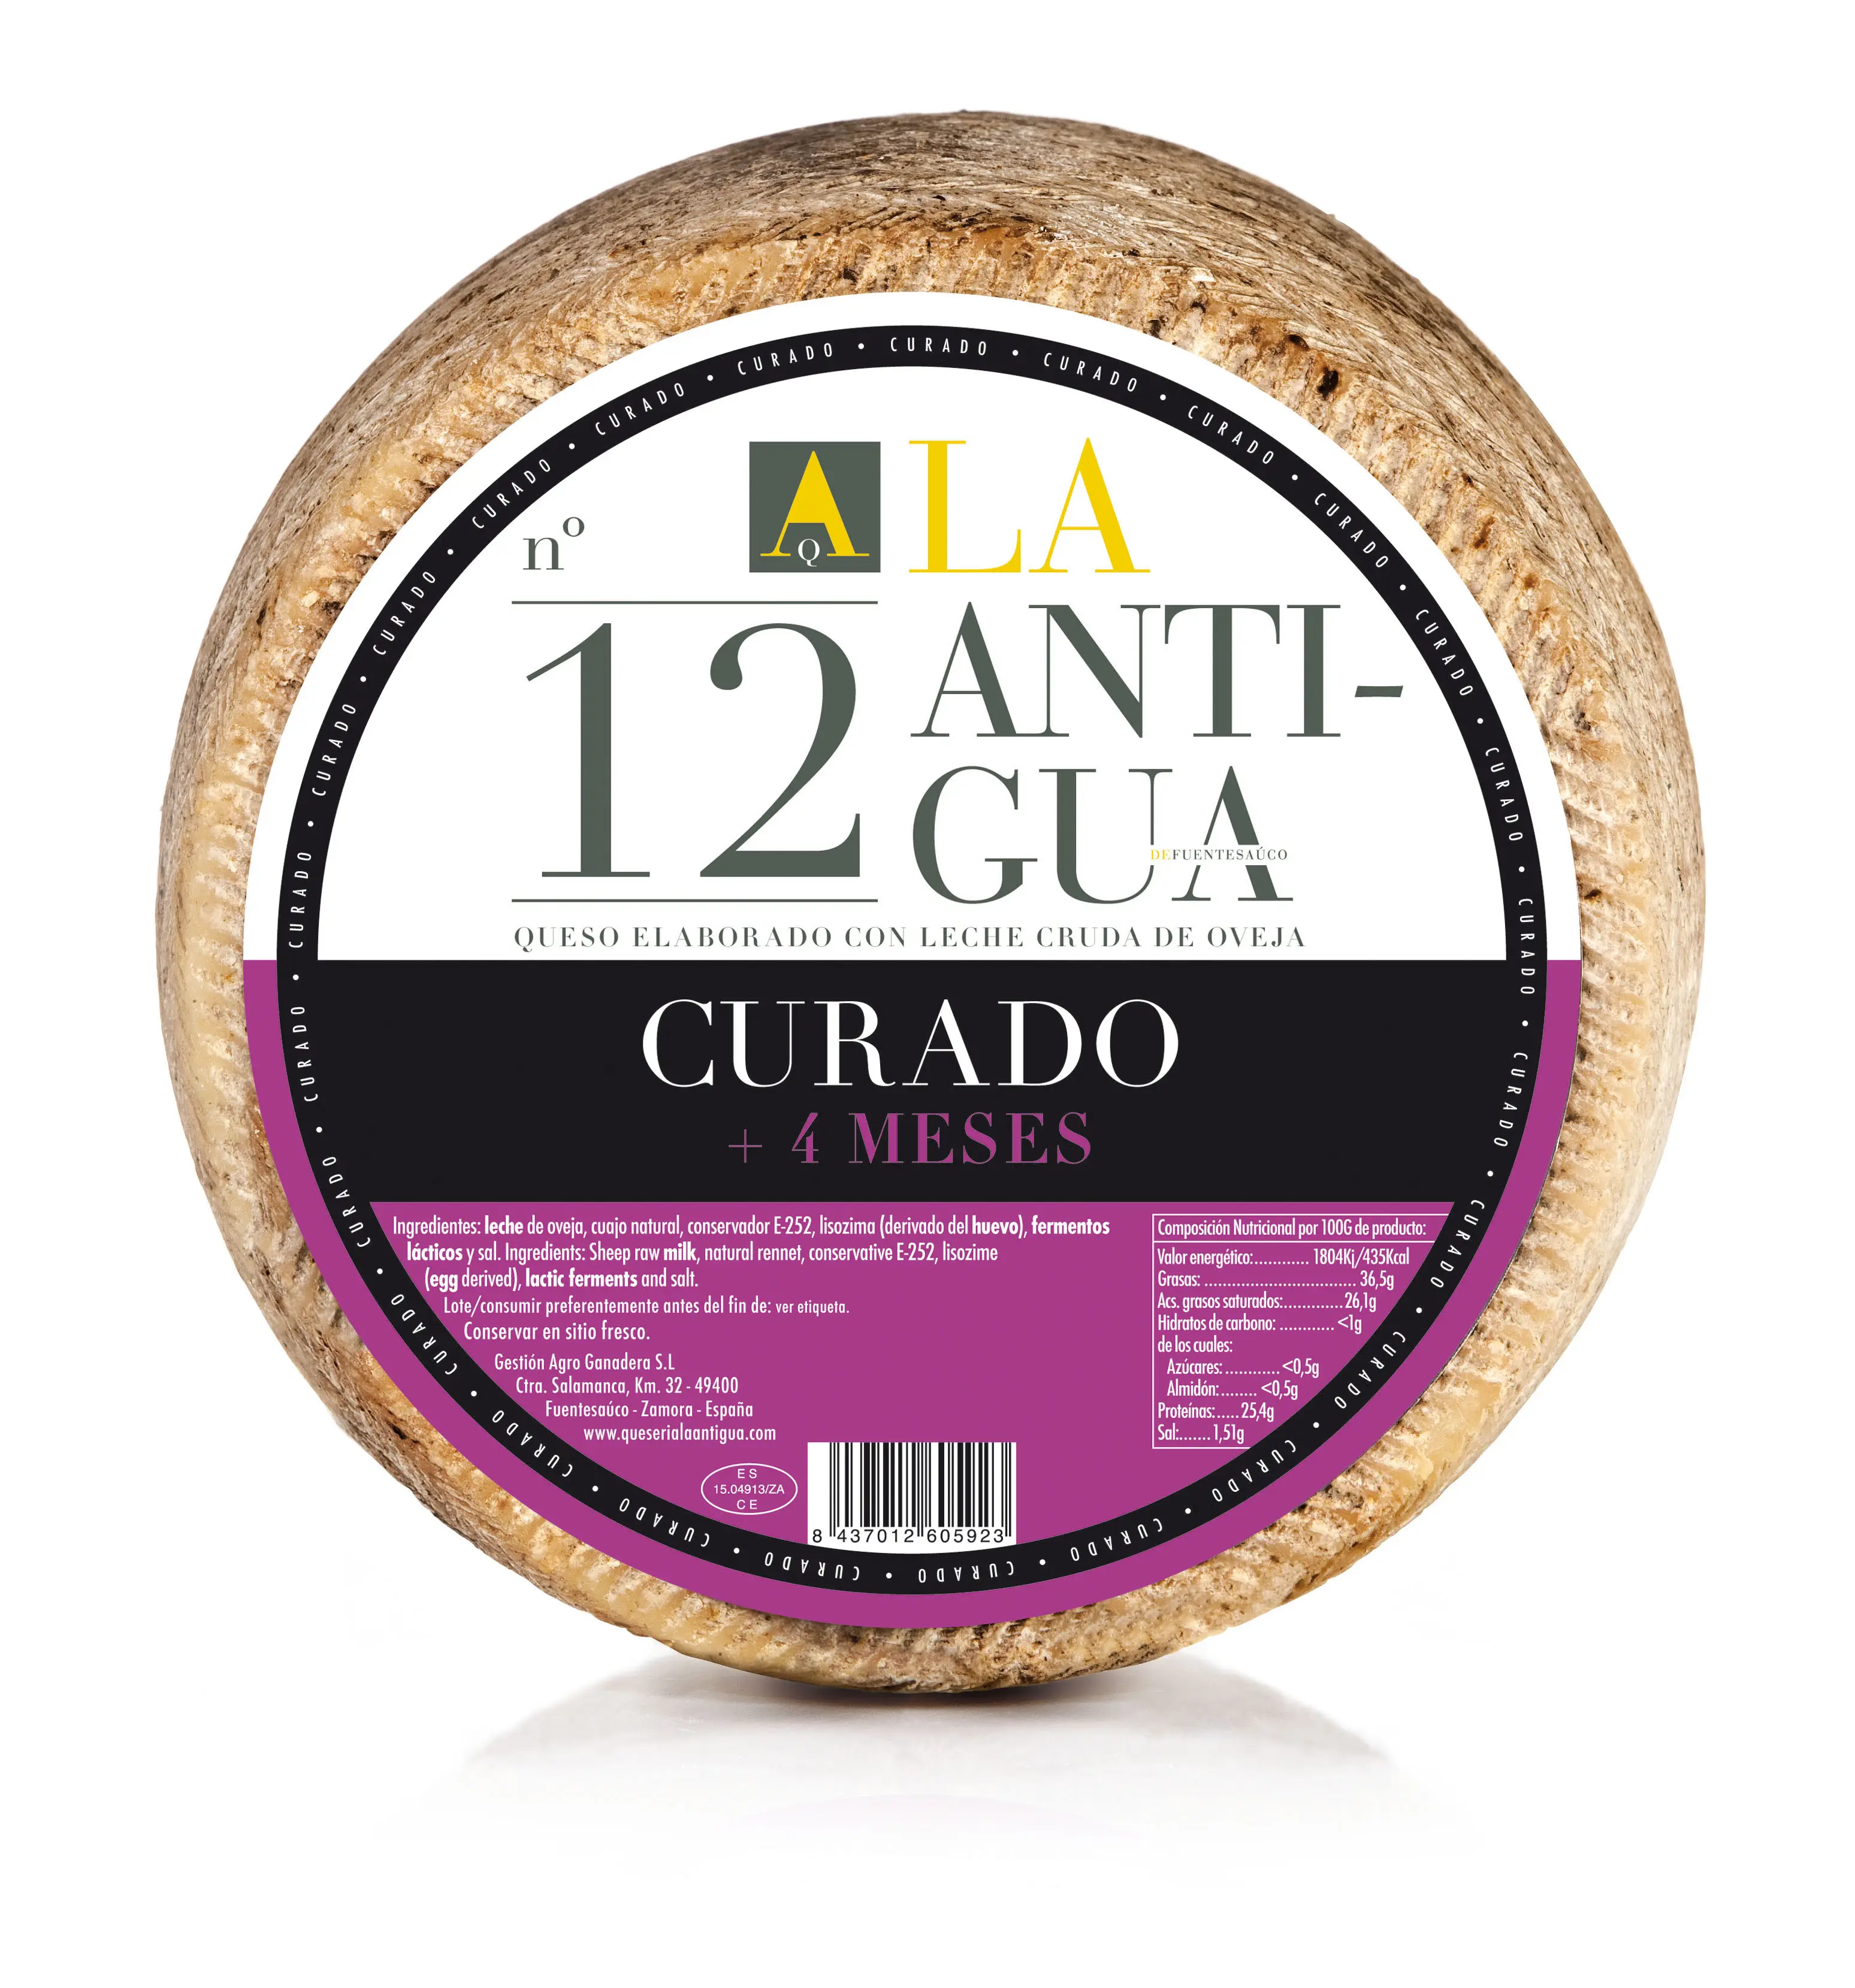 La Antigua Cured Sheep Cheese